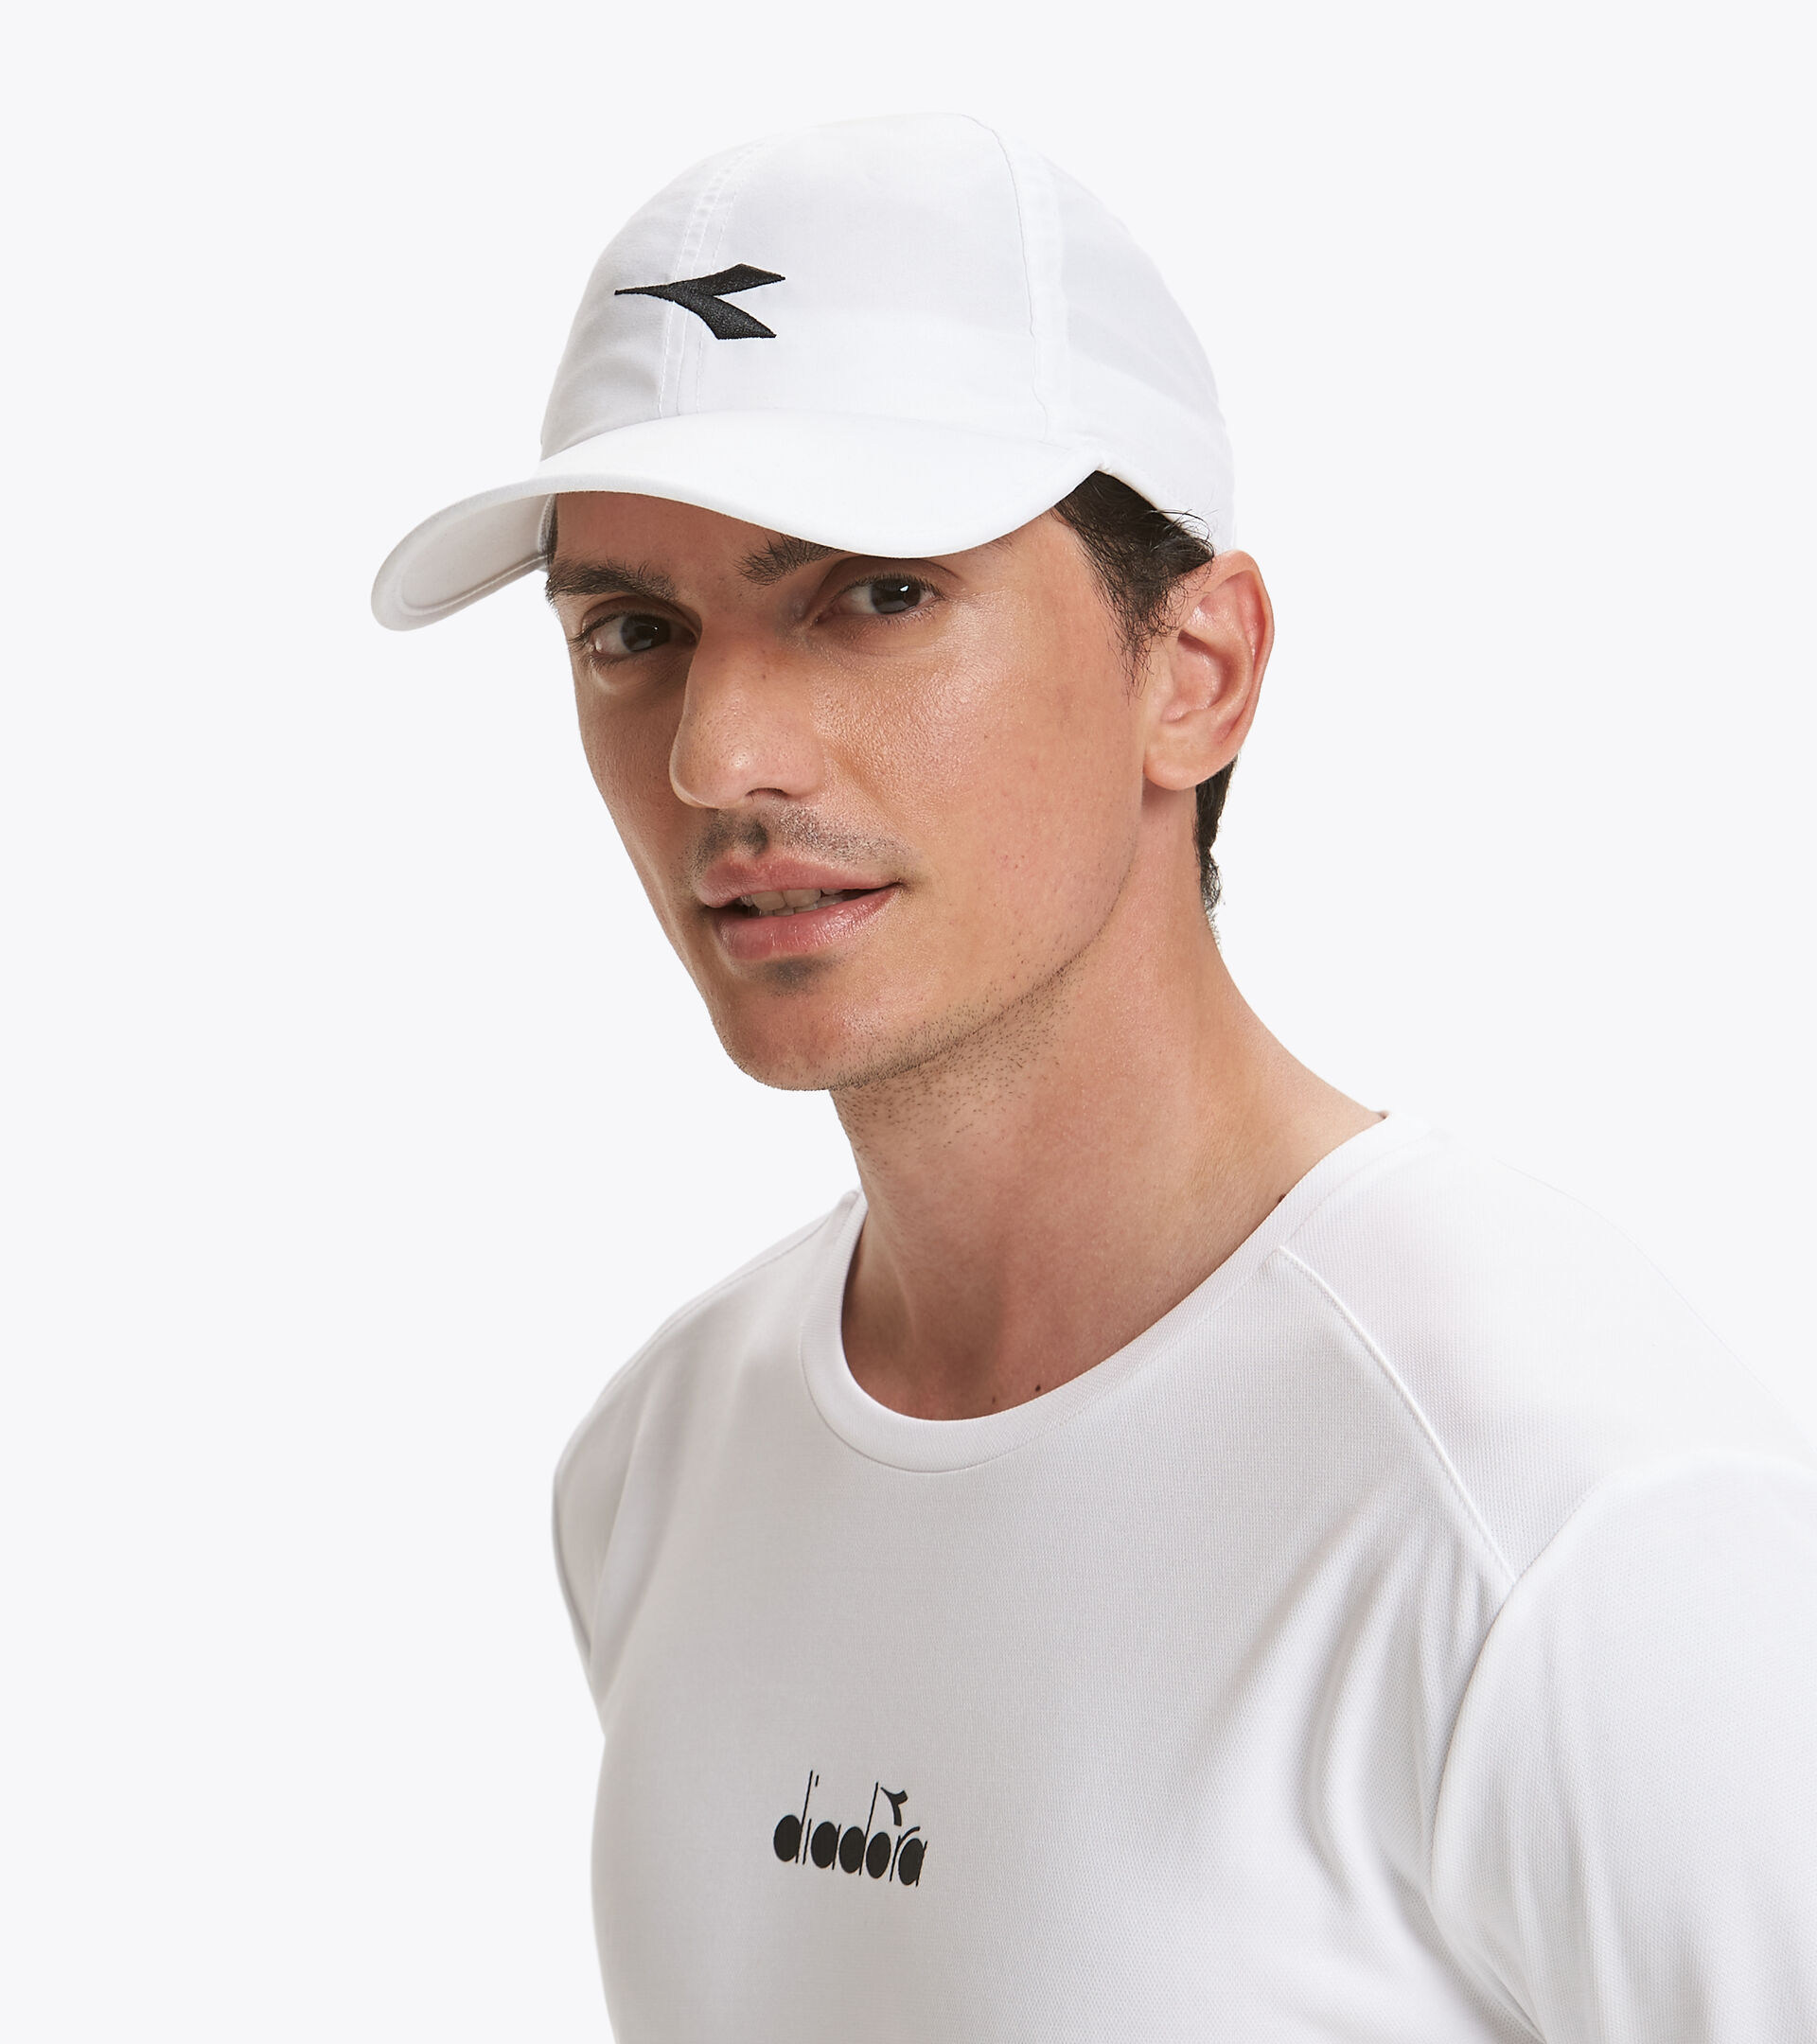 Tennis-style hat - Unisex ADJUSTABLE CAP WHITE/BLACK - Diadora